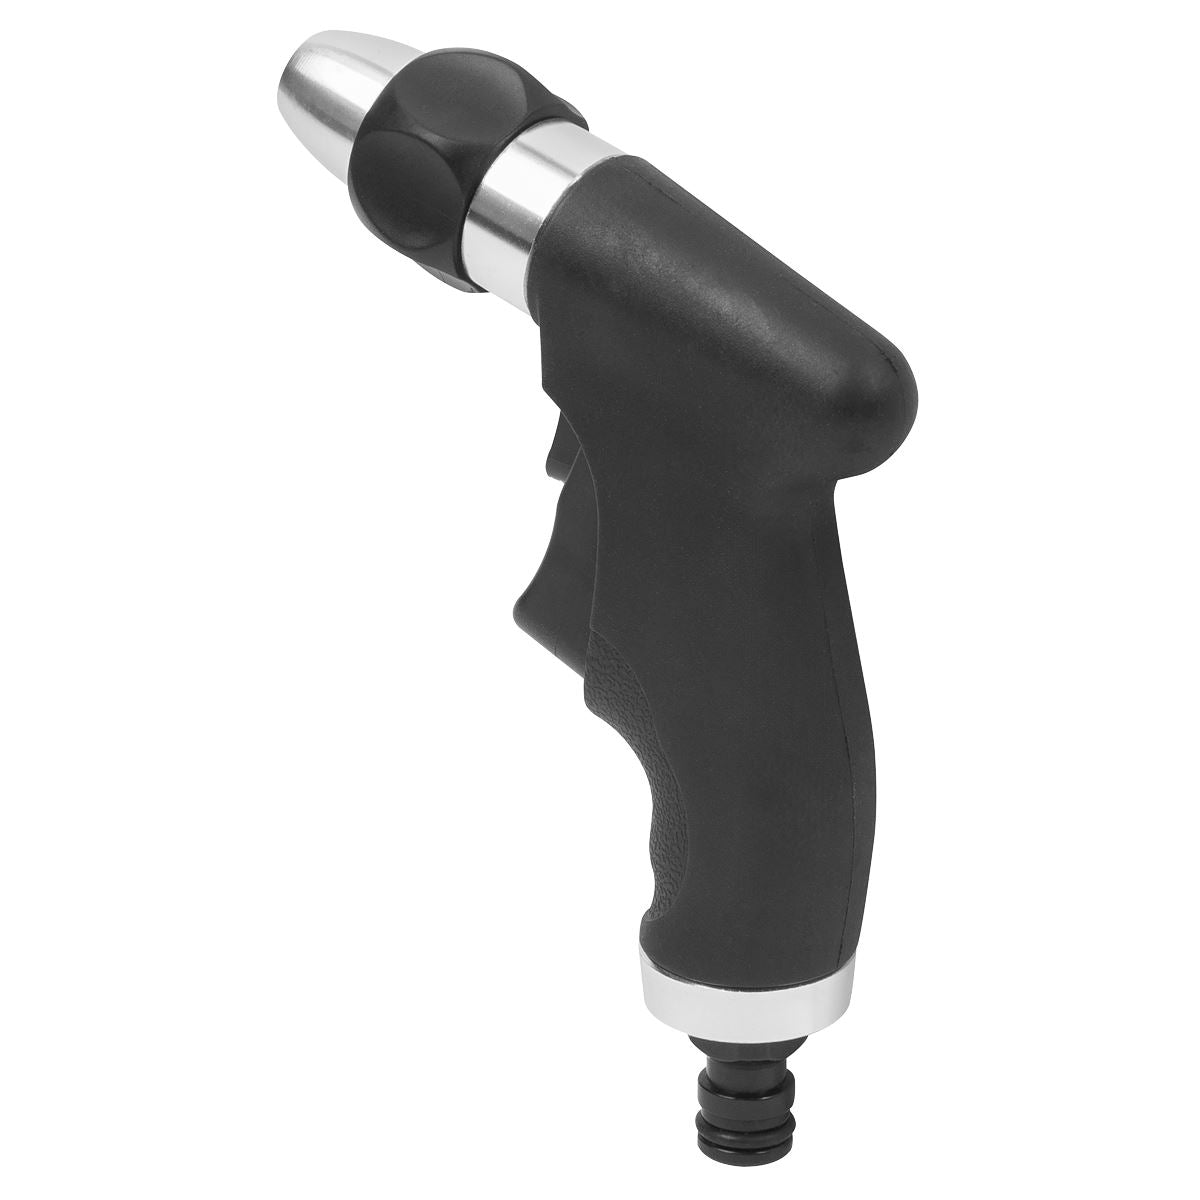 Sealey Adjustable Spray Gun With Soft Grip Handle